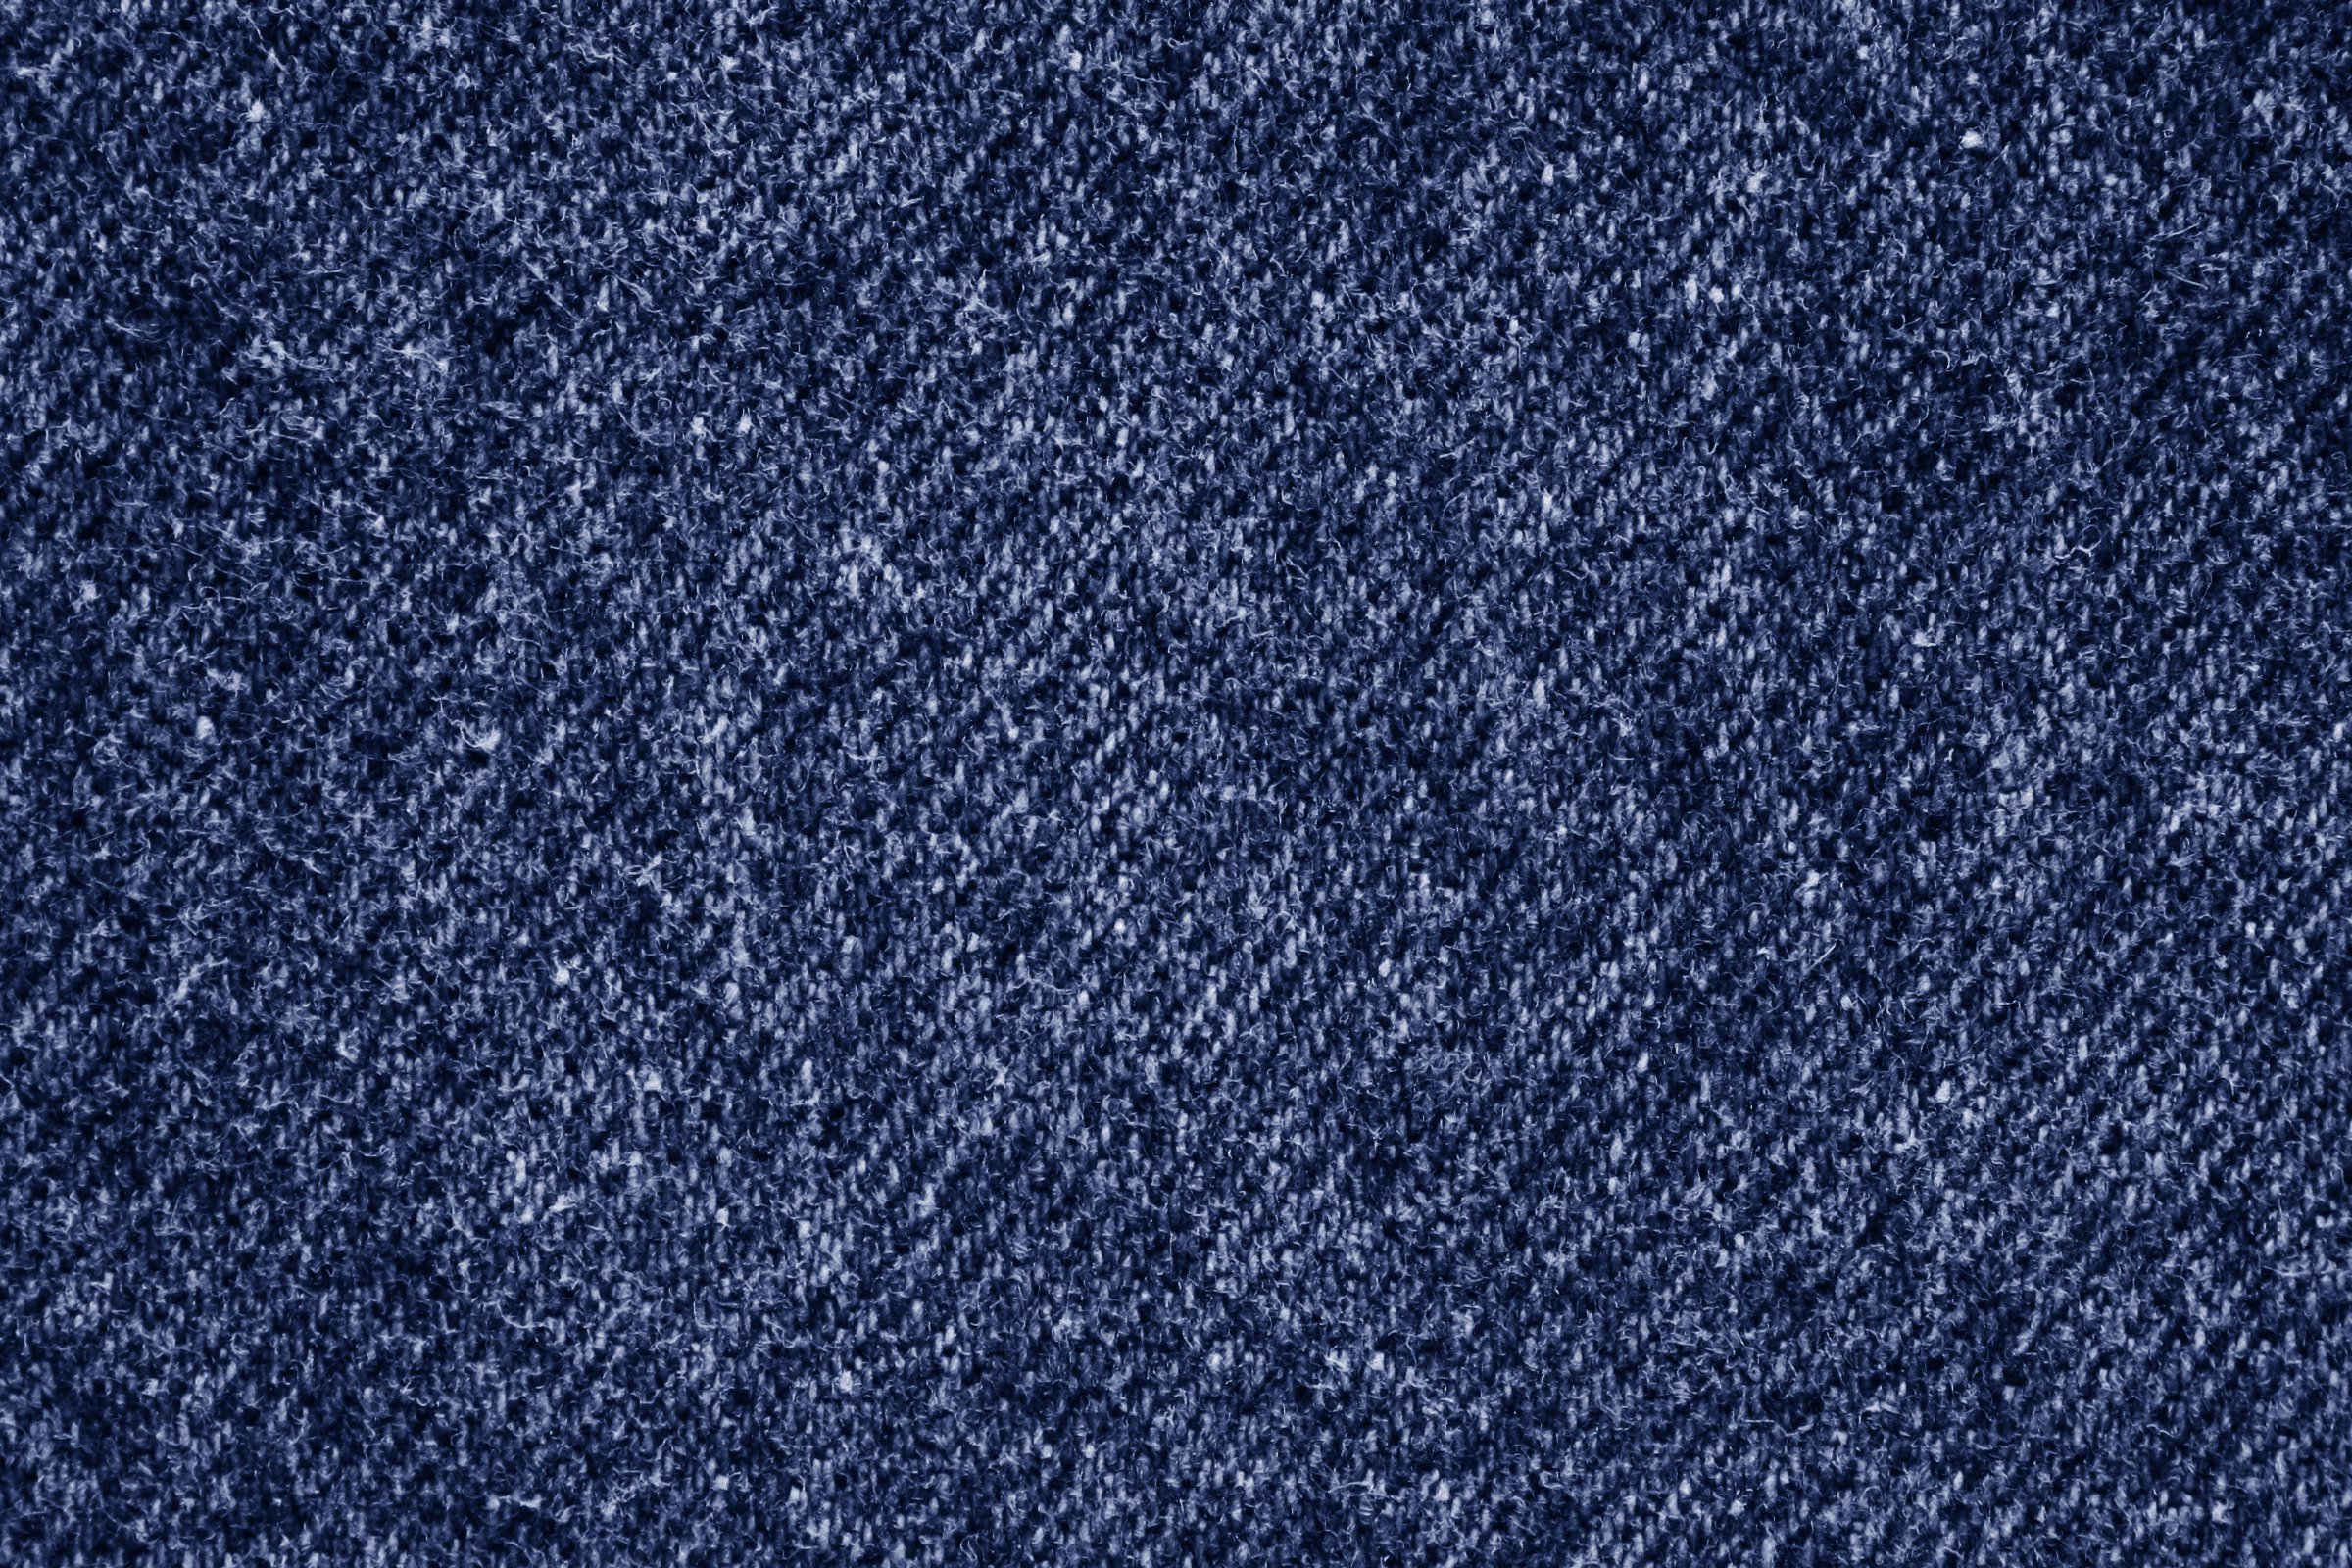 https://www.photos-public-domain.com/wp-content/uploads/2011/10/dark-blue-denim-fabric-texture.jpg